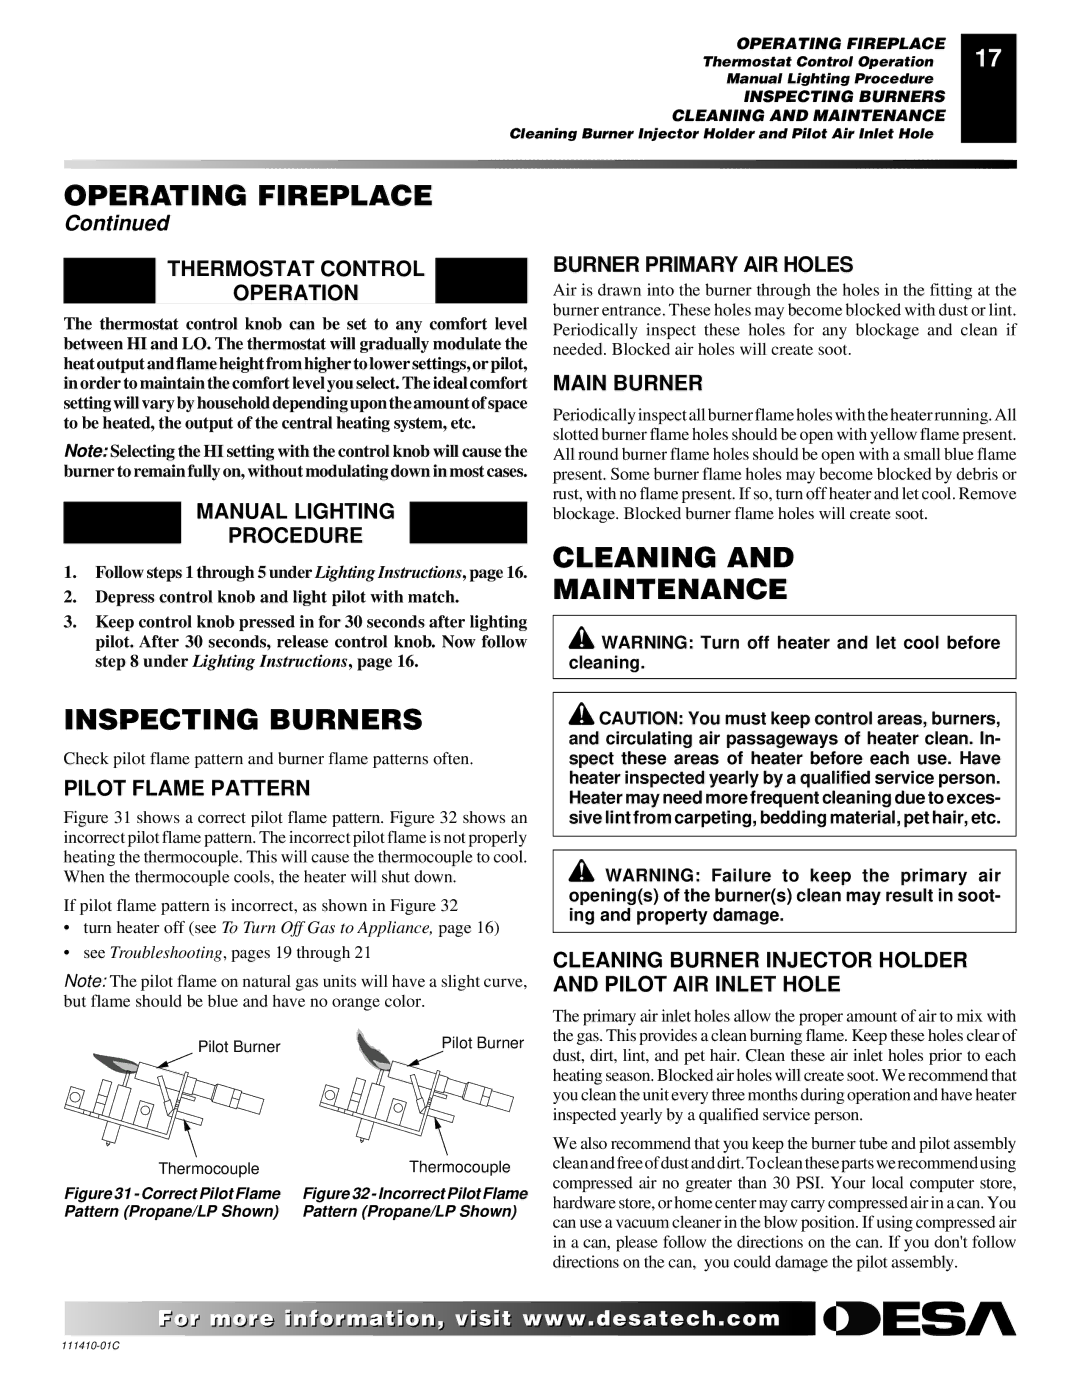 Desa CF26NT installation manual Inspecting Burners, Cleaning Maintenance 